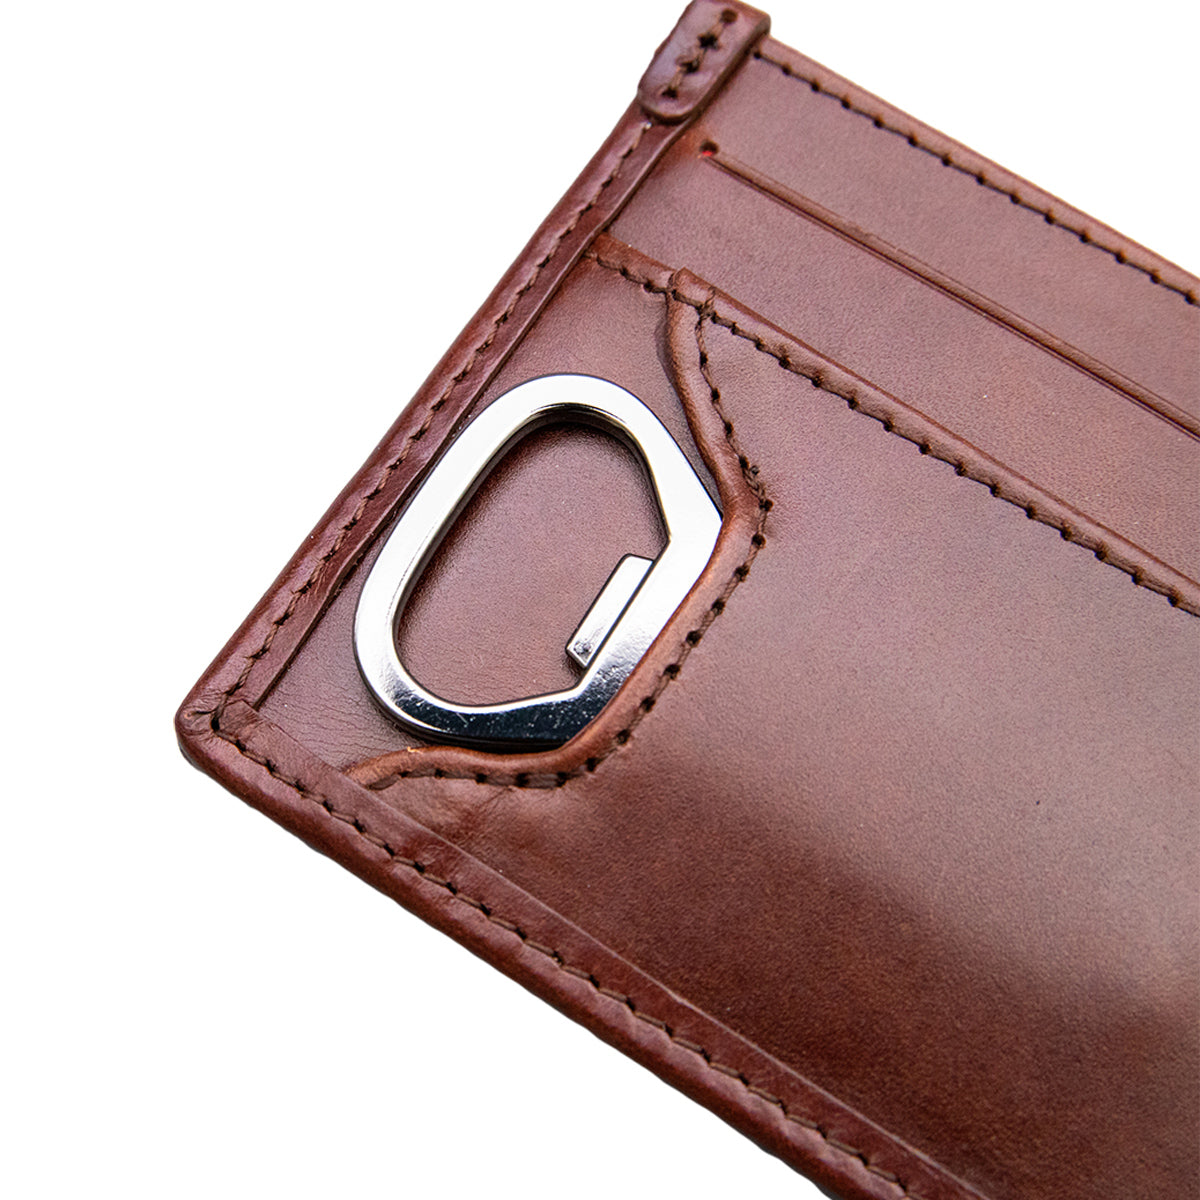 Baekgaard Leather & Canvas Card Case Wallet With Bottle Opener